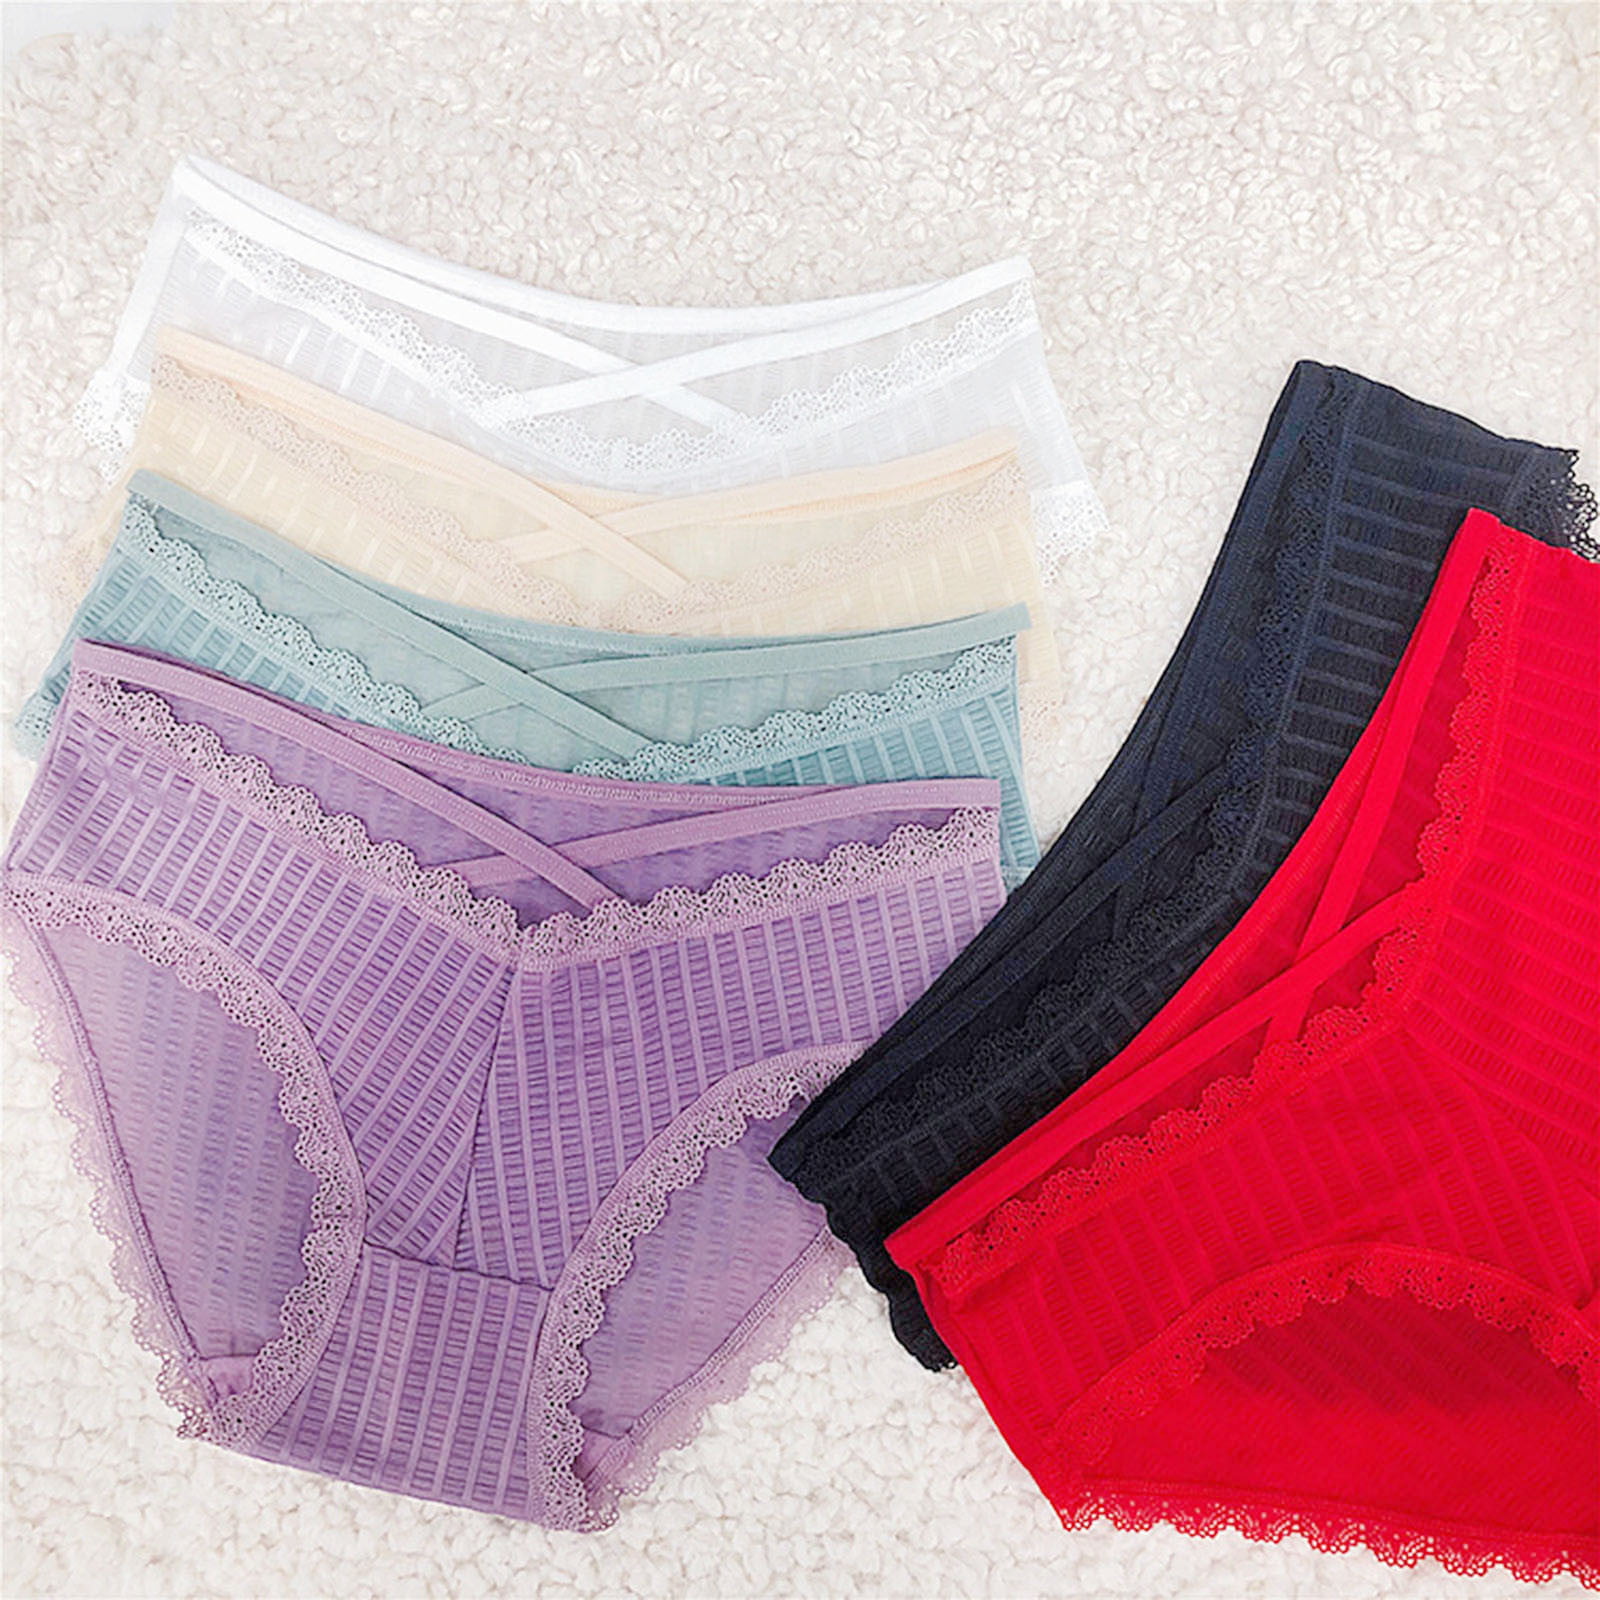 zuwimk Cotton Thongs For Women,Women Assorted Lace Underwear Cute Bow-Tie  Lingerie Thongs Black,S